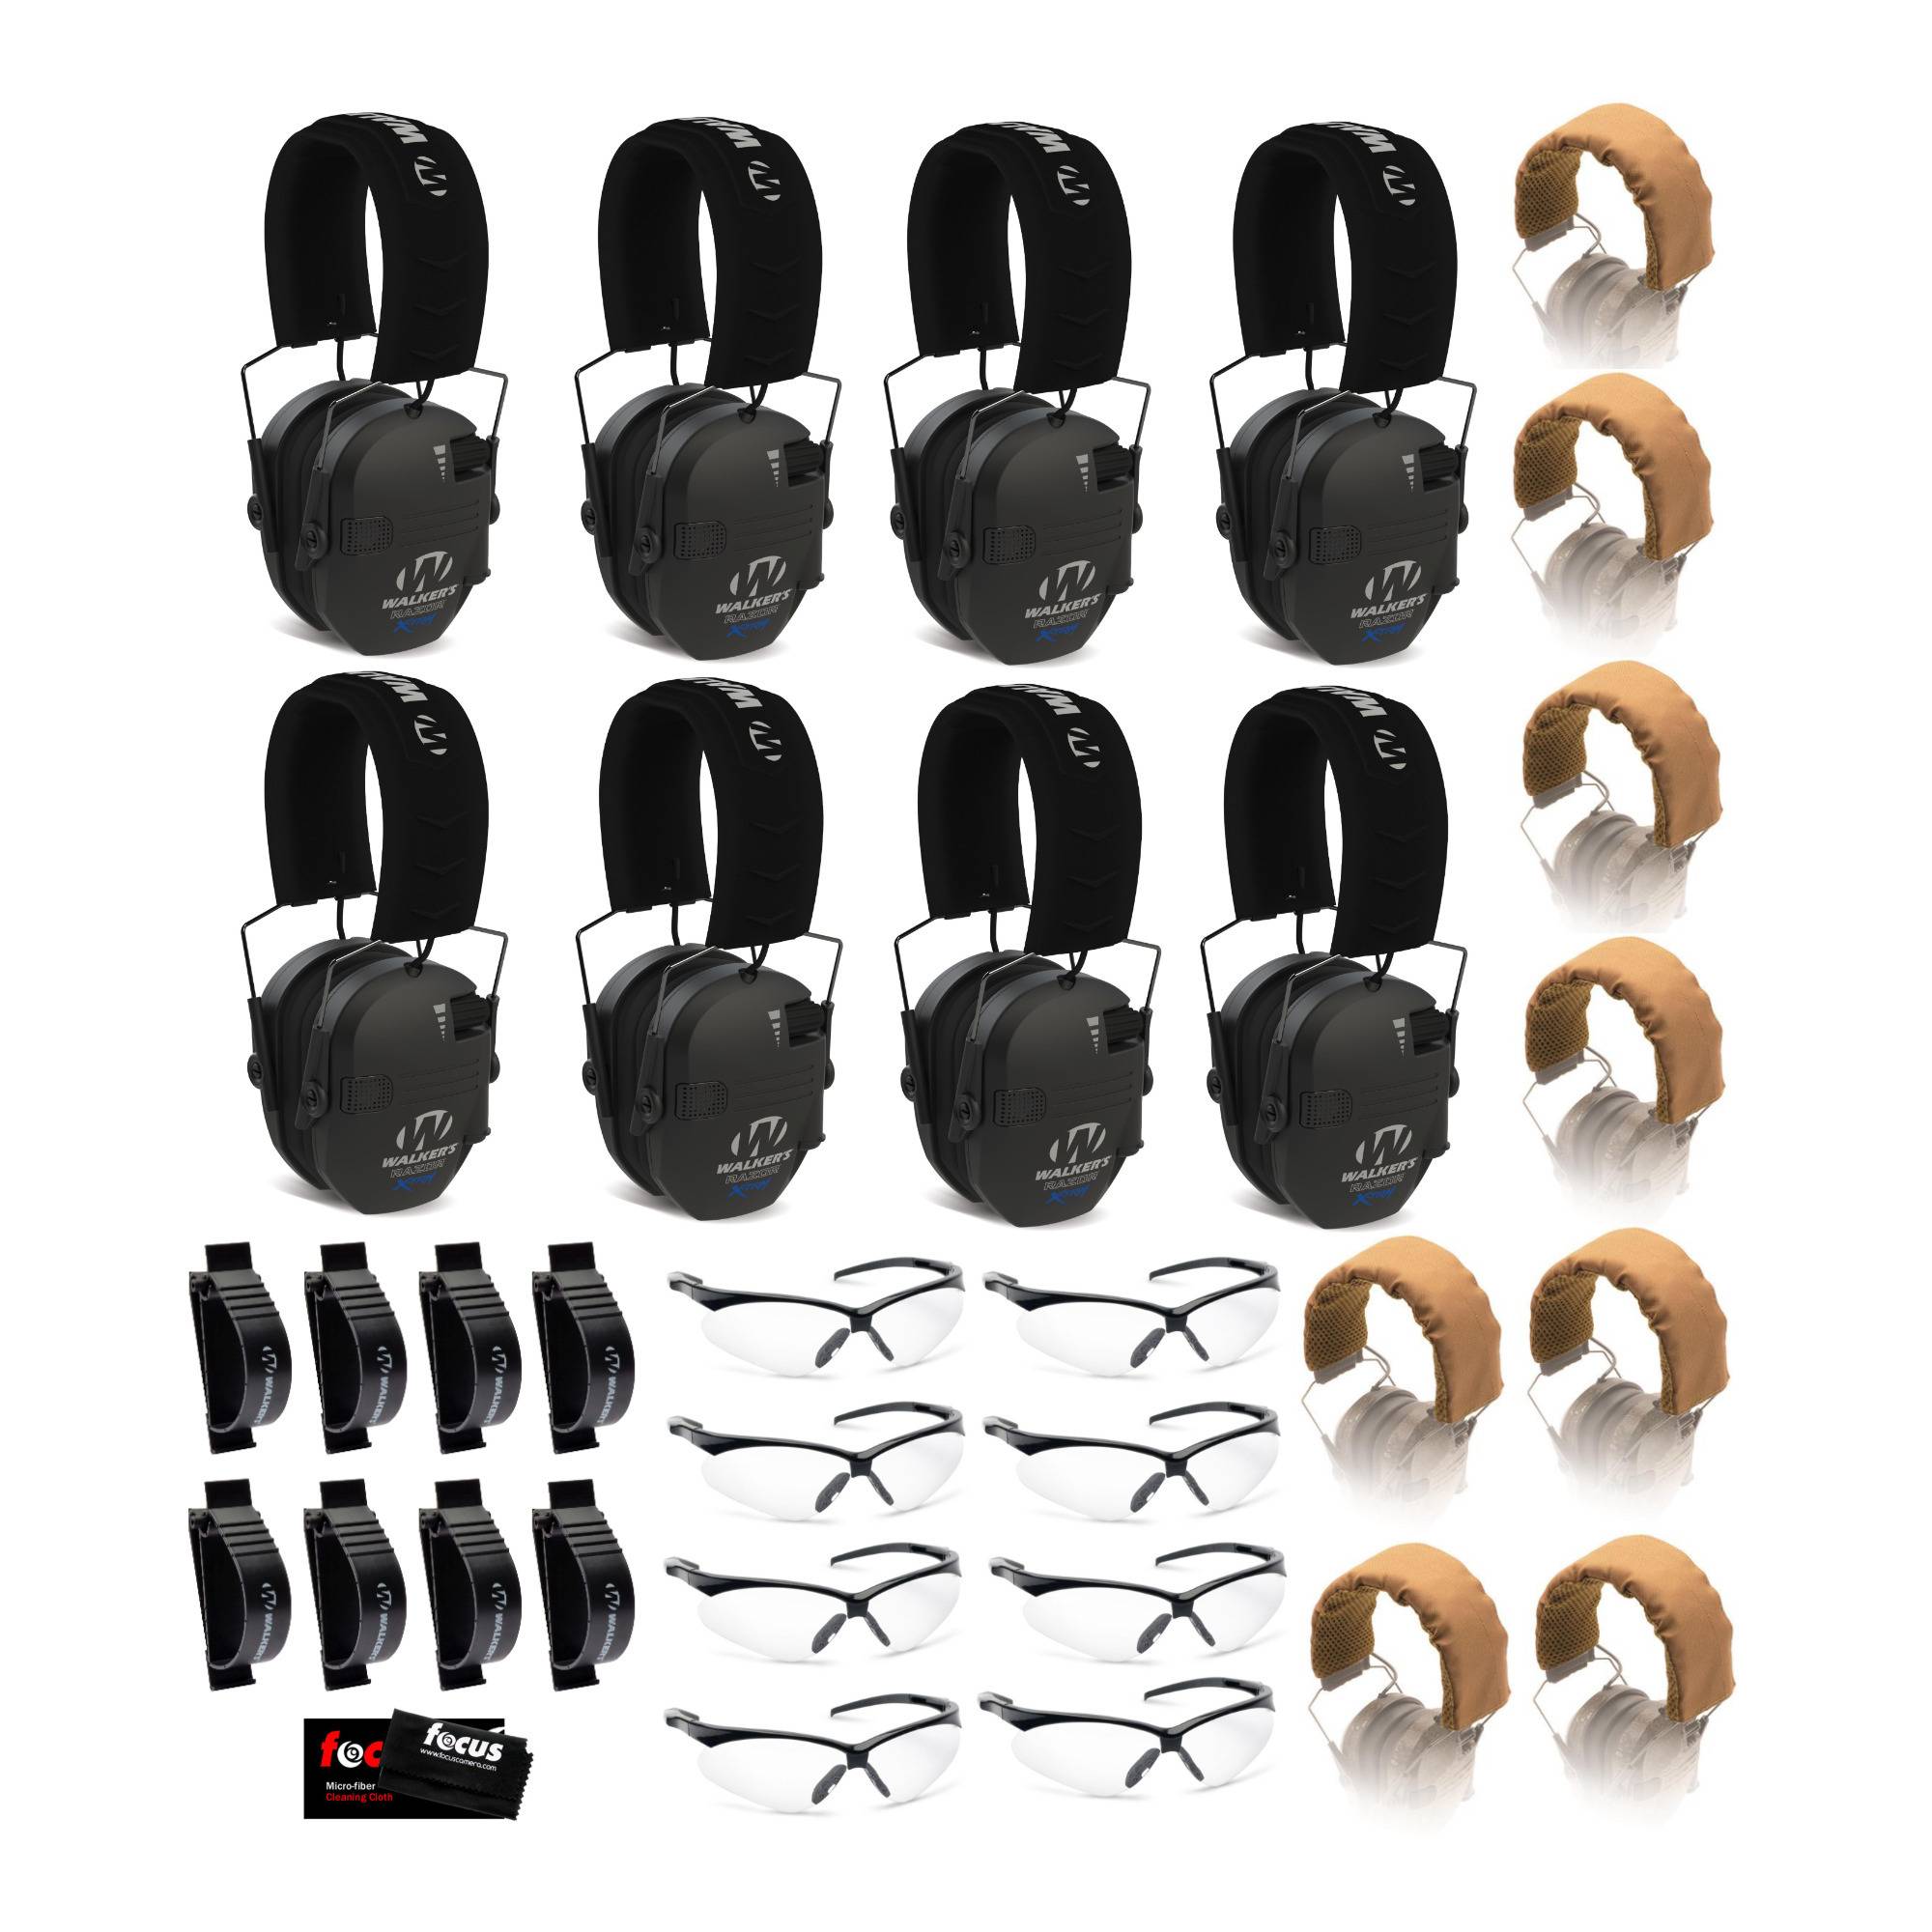 Walker's Razor X-TRM Digital Ear Muffs (Black) Range Bundle (8-Pack)